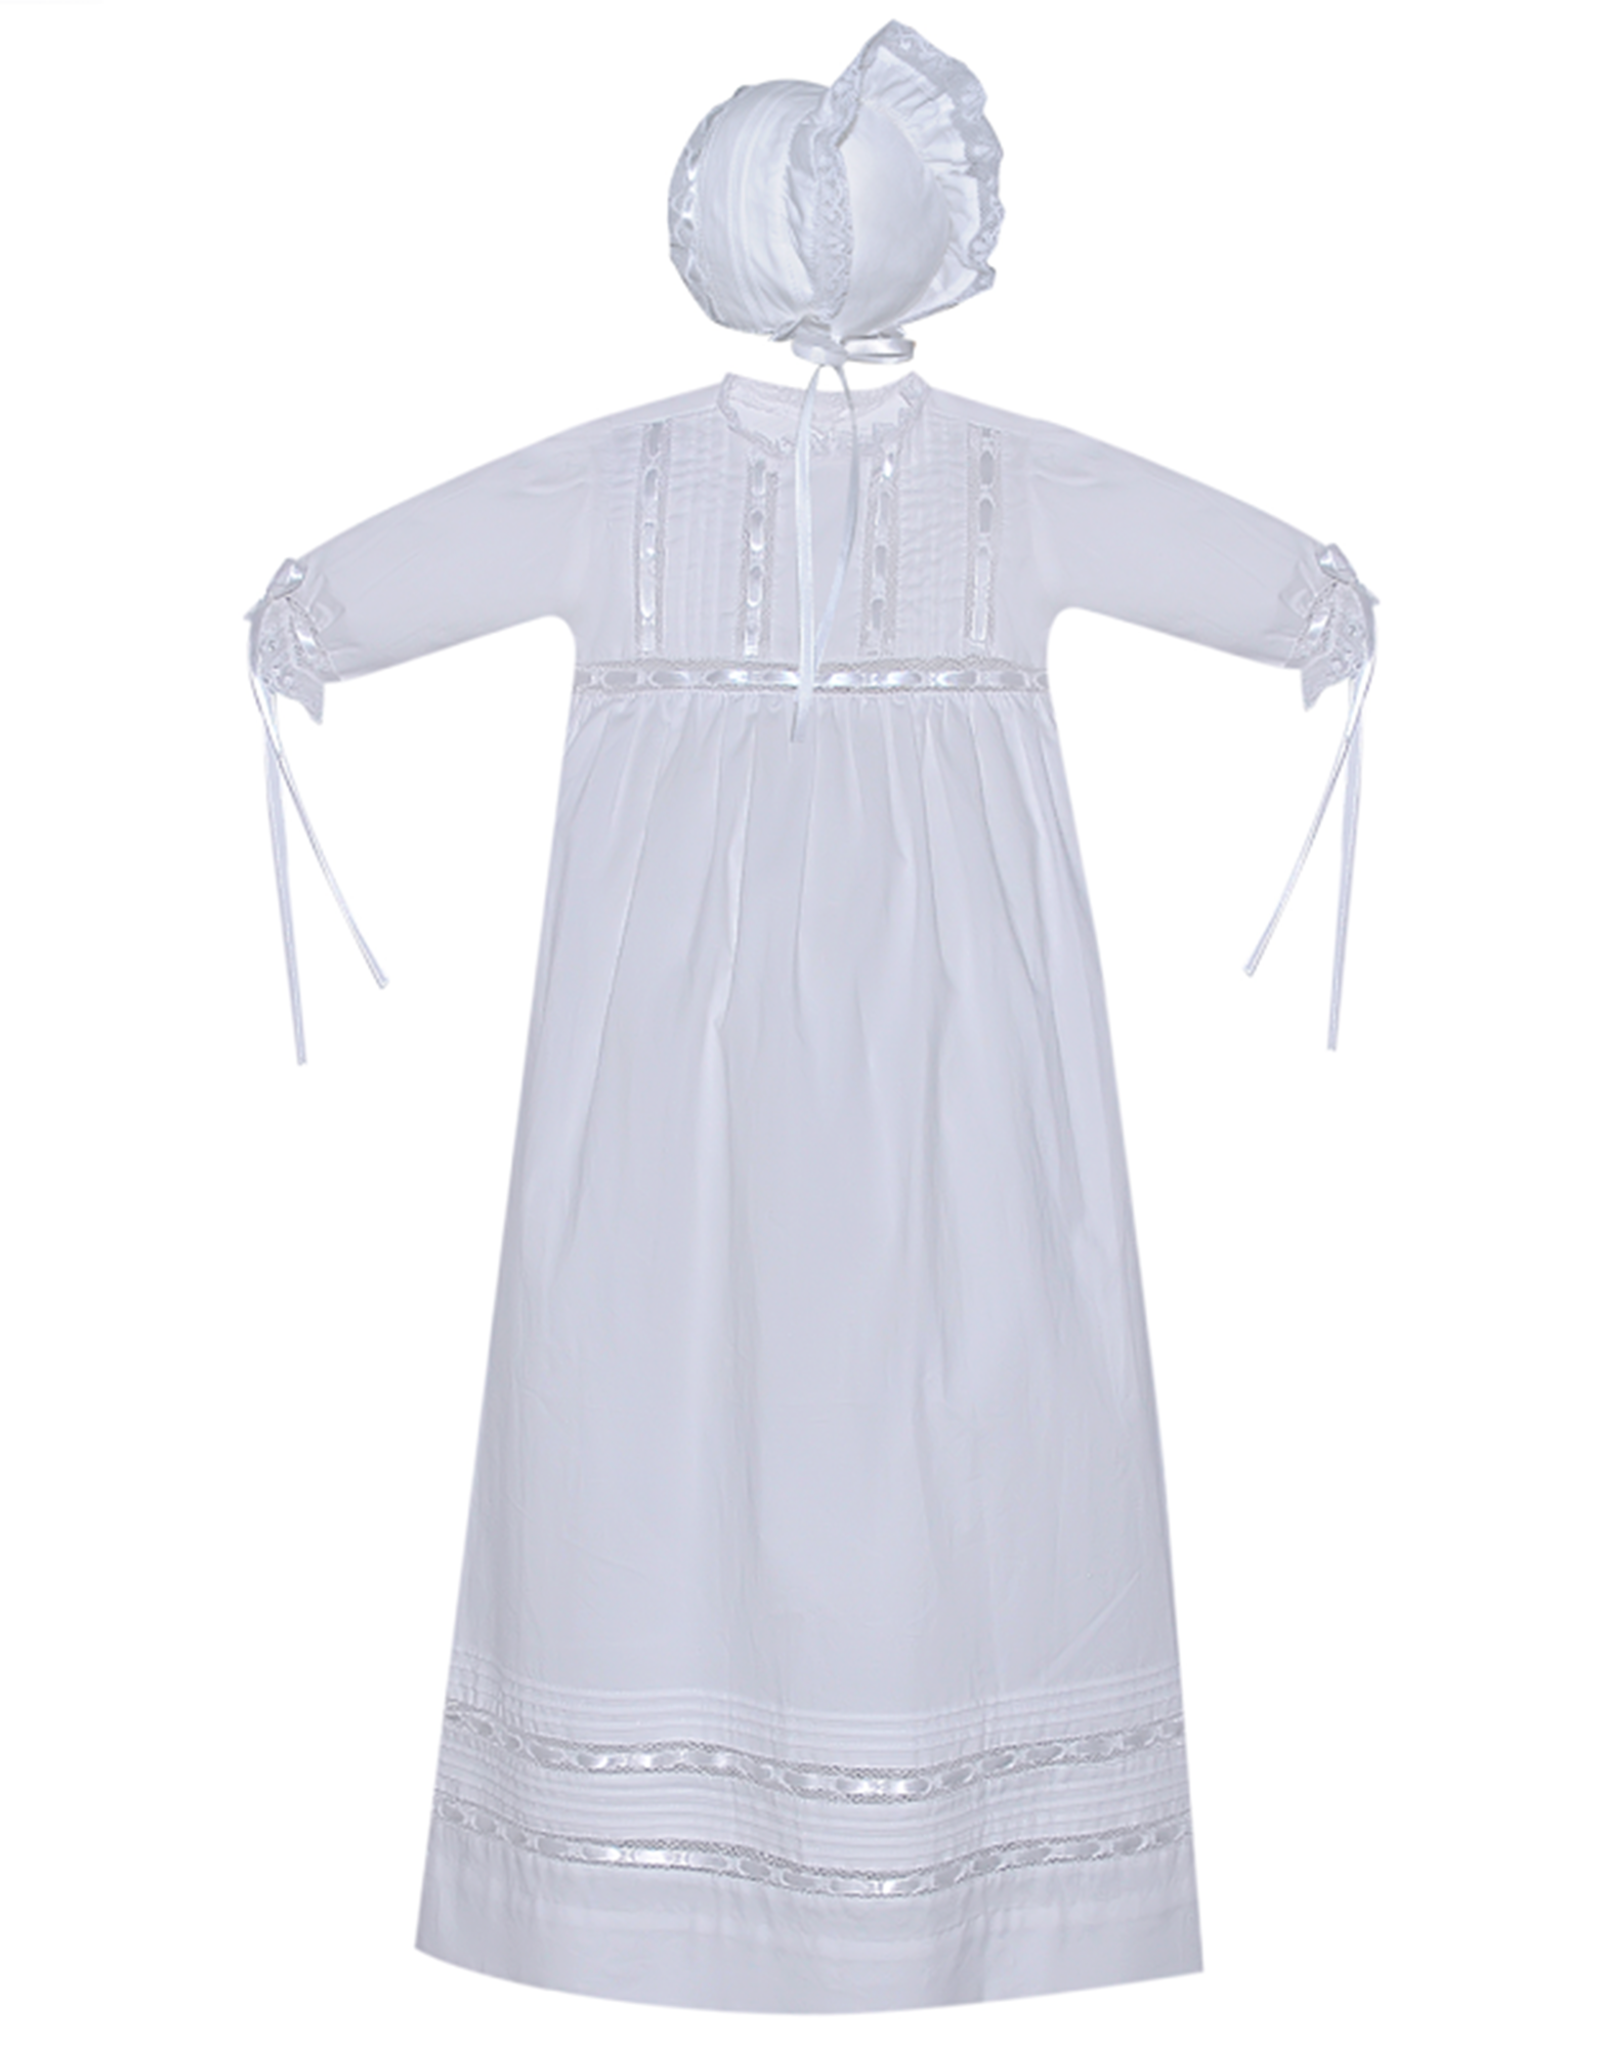 Baby Sen RORYCG Rory Christening Gown